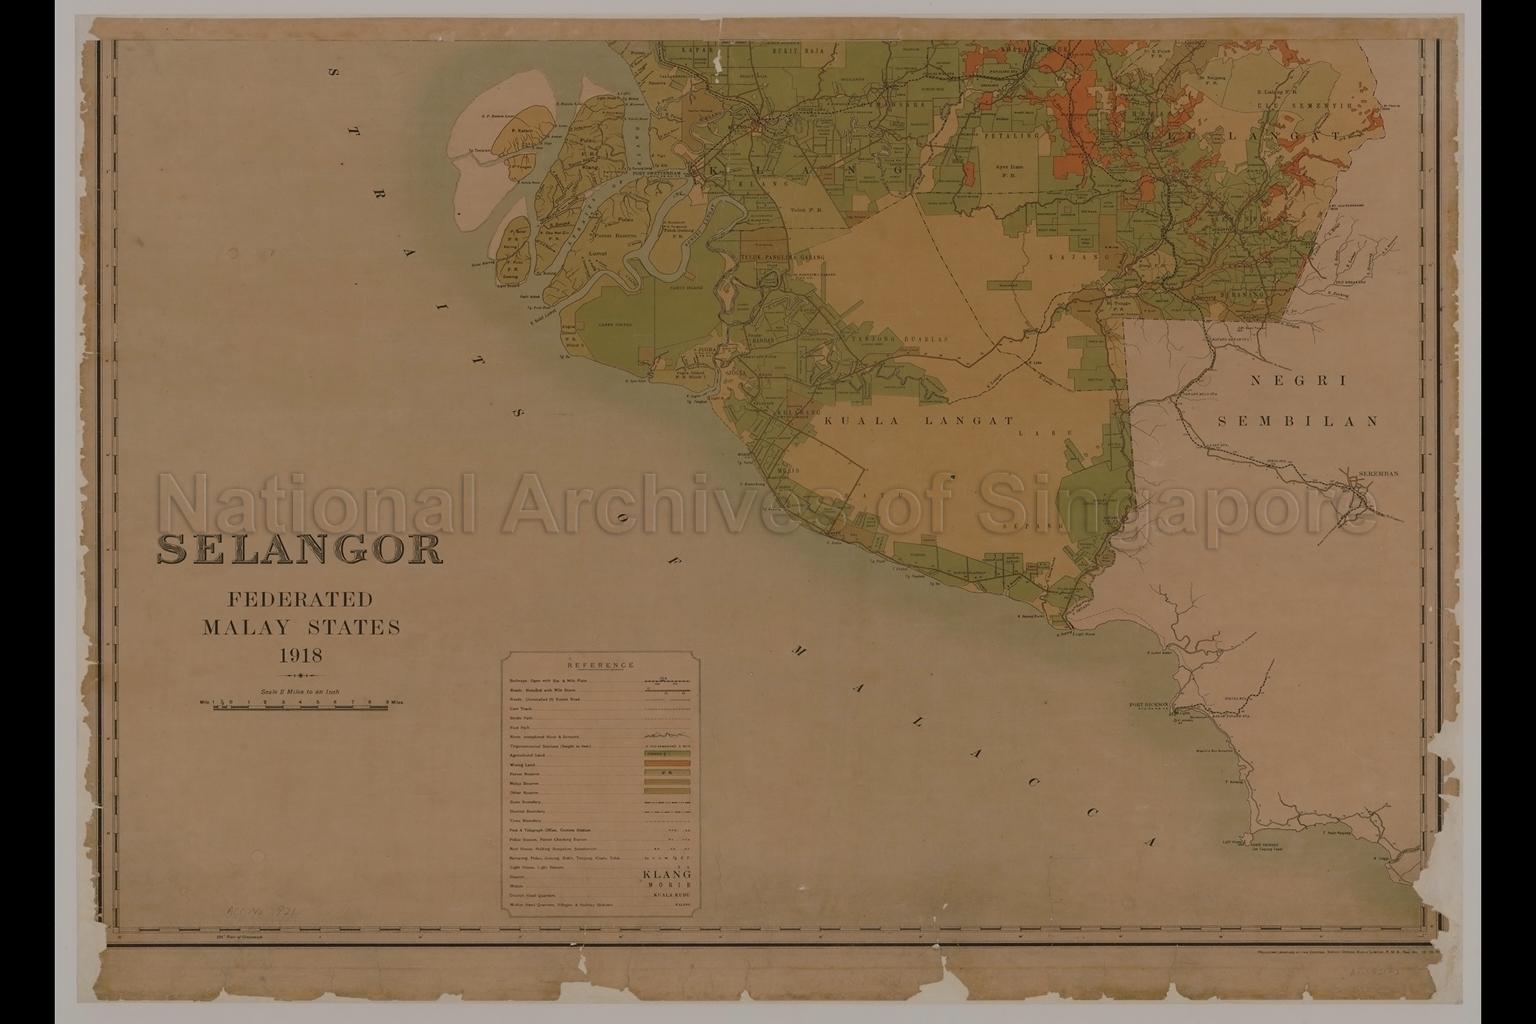 Selangor, Federated Malay States 1918